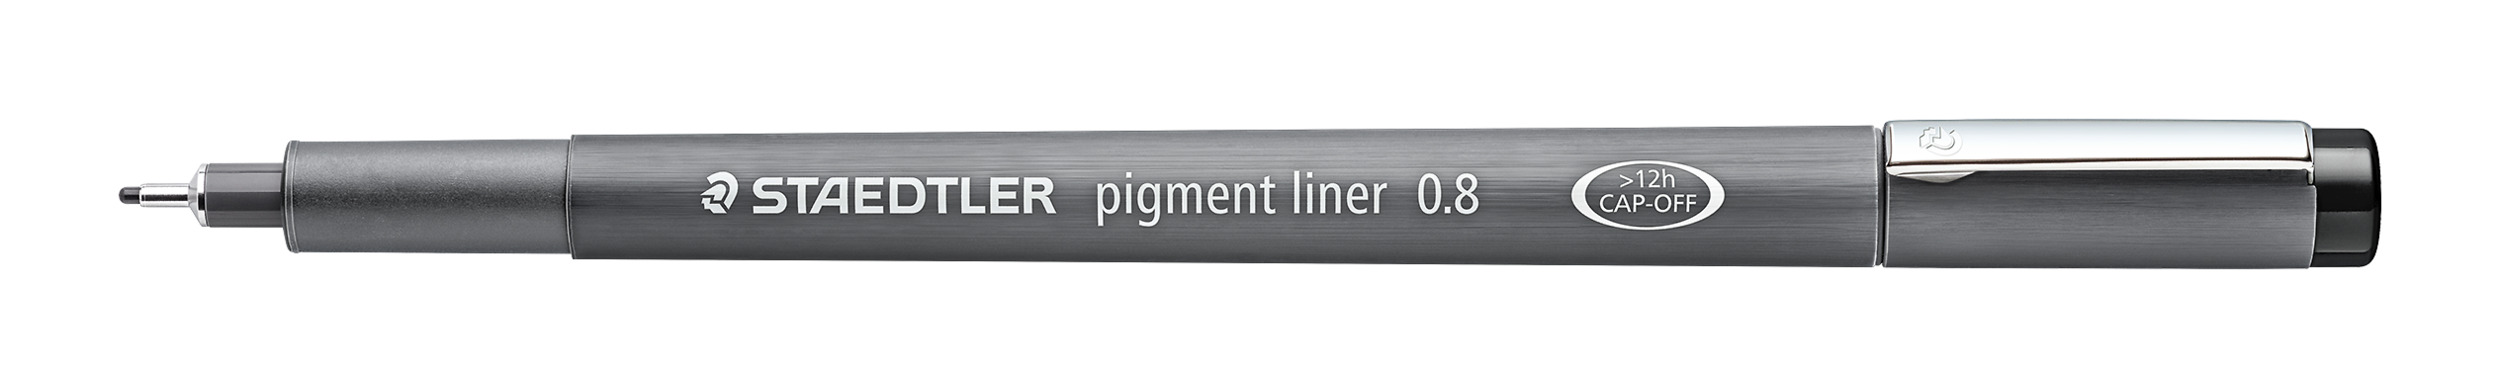 Pigment liner 0.8mm